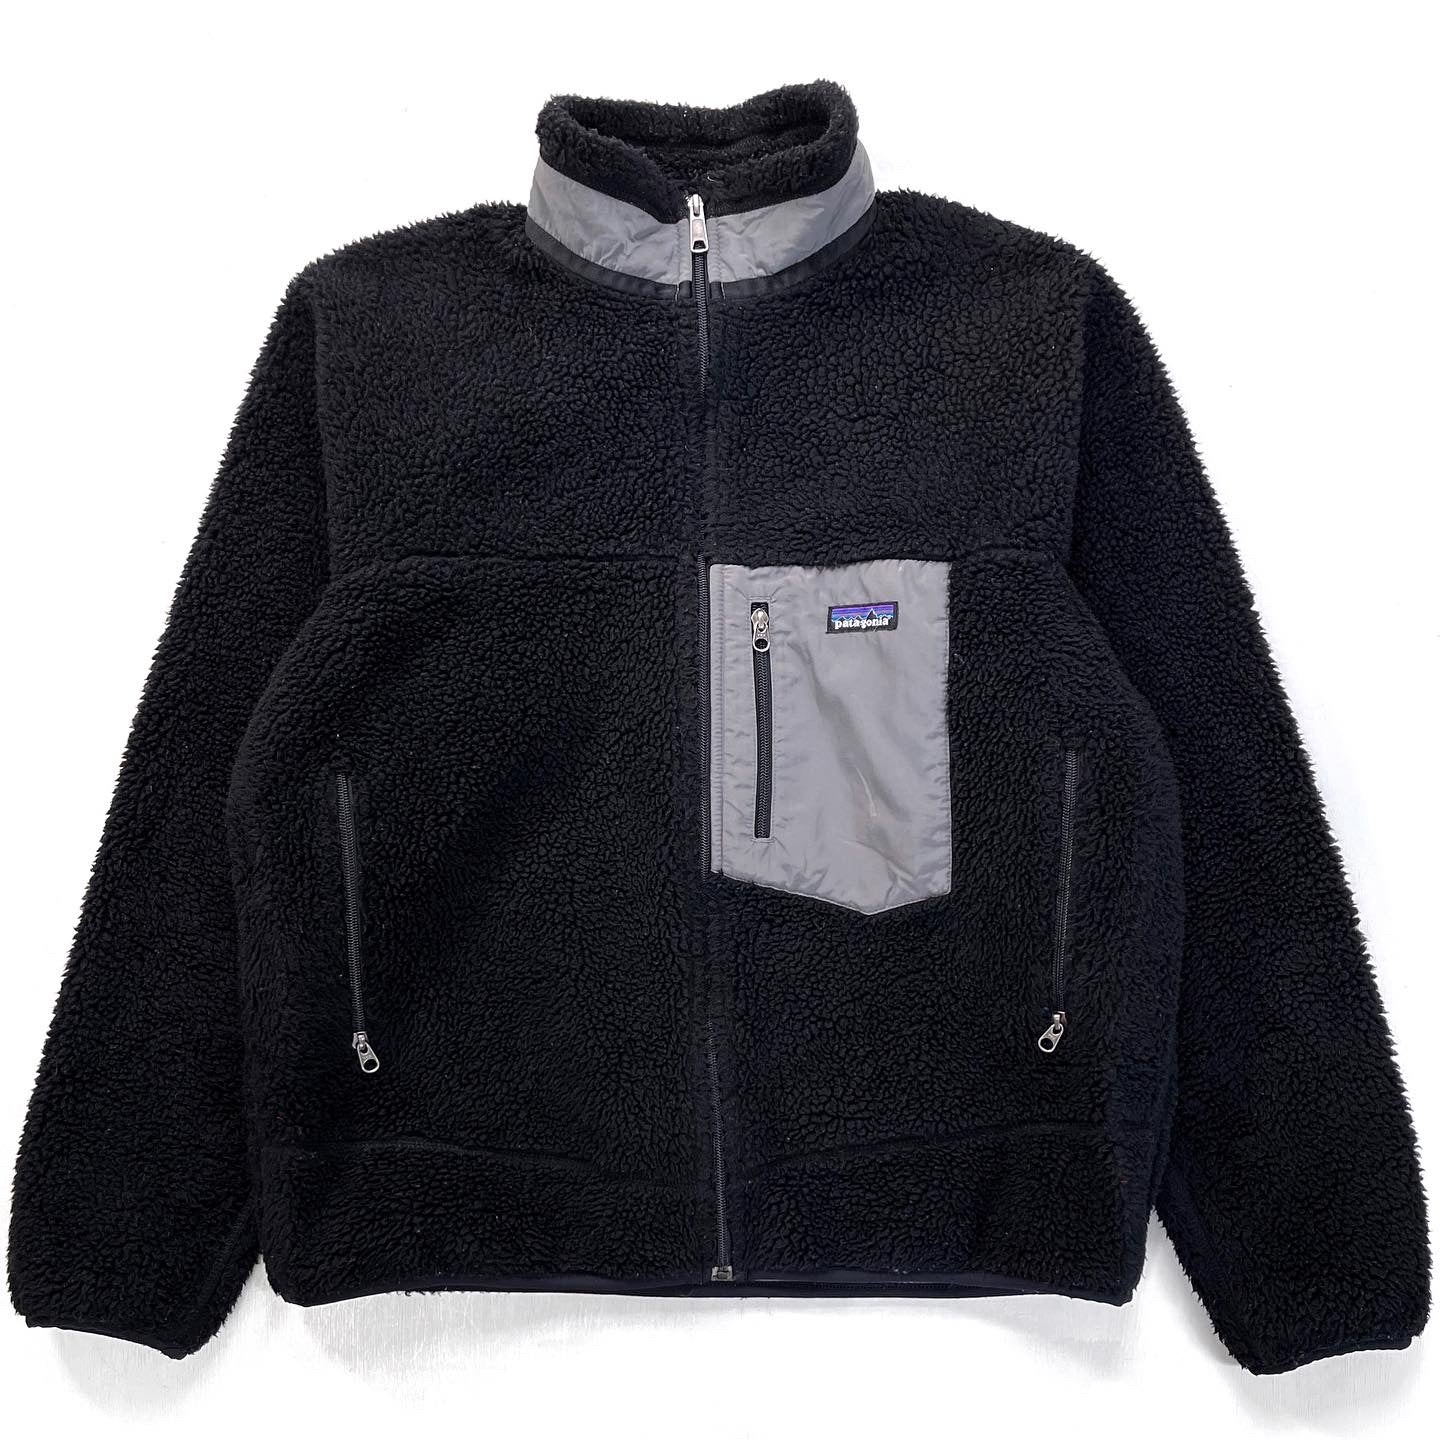 2010 Patagonia Mens Classic Retro-X Fleece Jacket, Black & Grey (L)